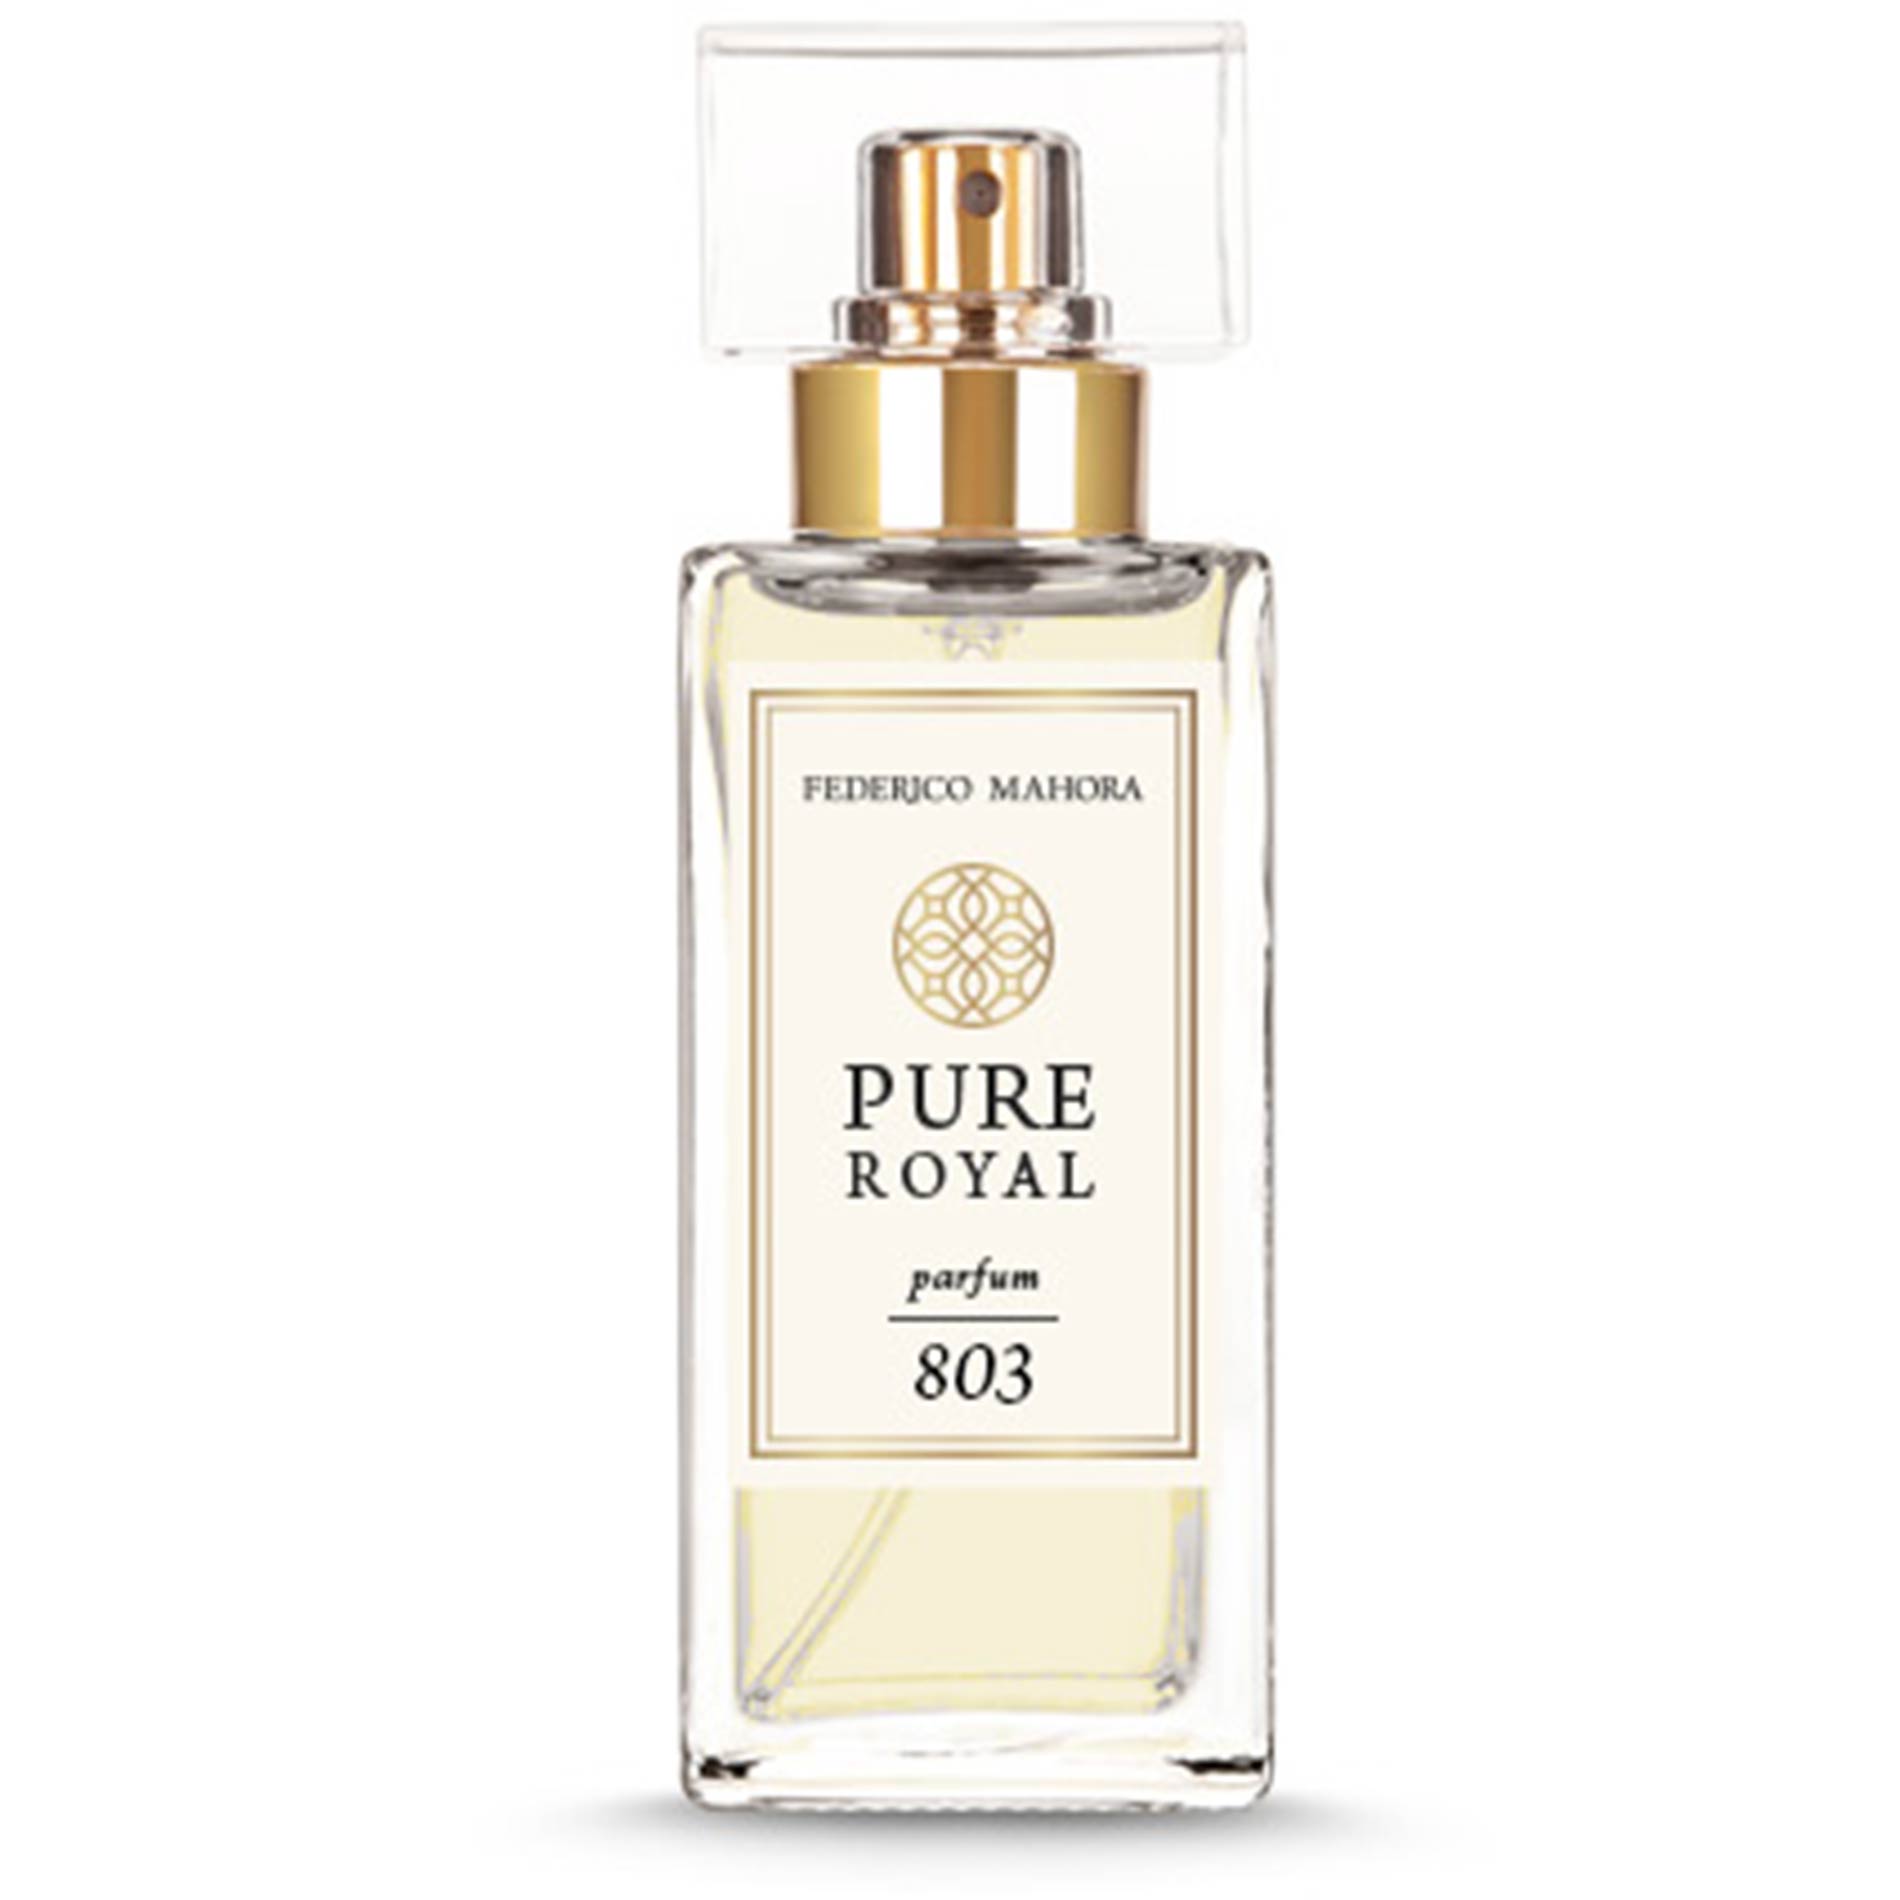 PURE ROYAL 803 Parfum by Federico Mahora